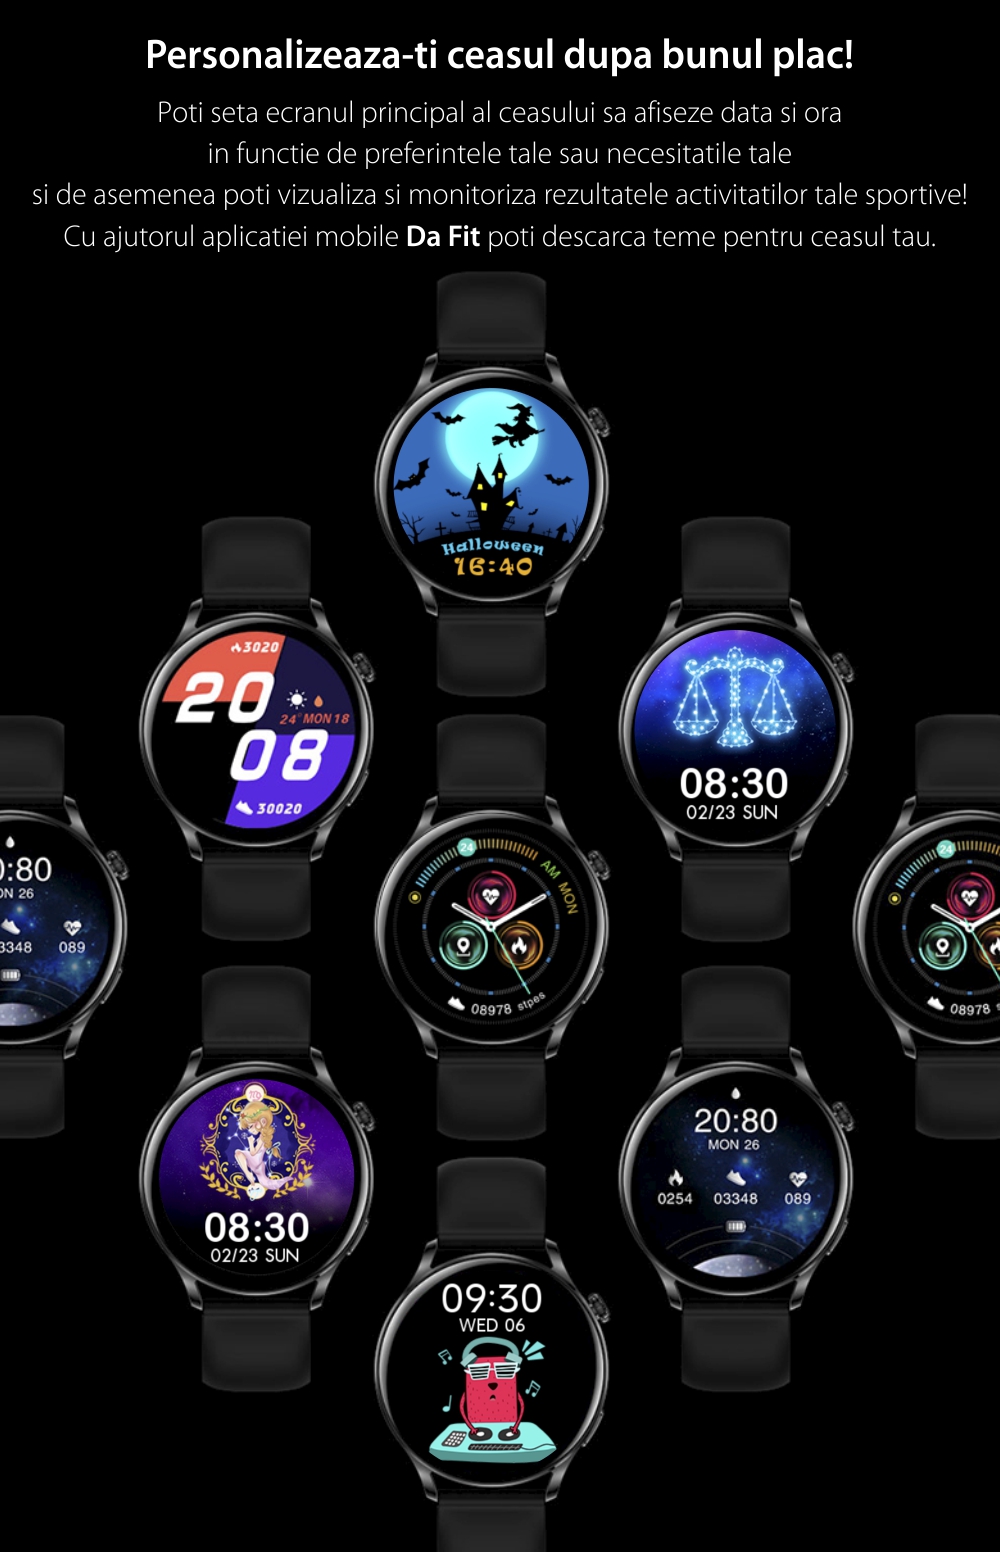 Ceas Smartwatch XK Fitness AK37 cu Functii monitorizare sanatate, Notificari, Bluetooth, Cronometru, Bratara metalica, Auriu